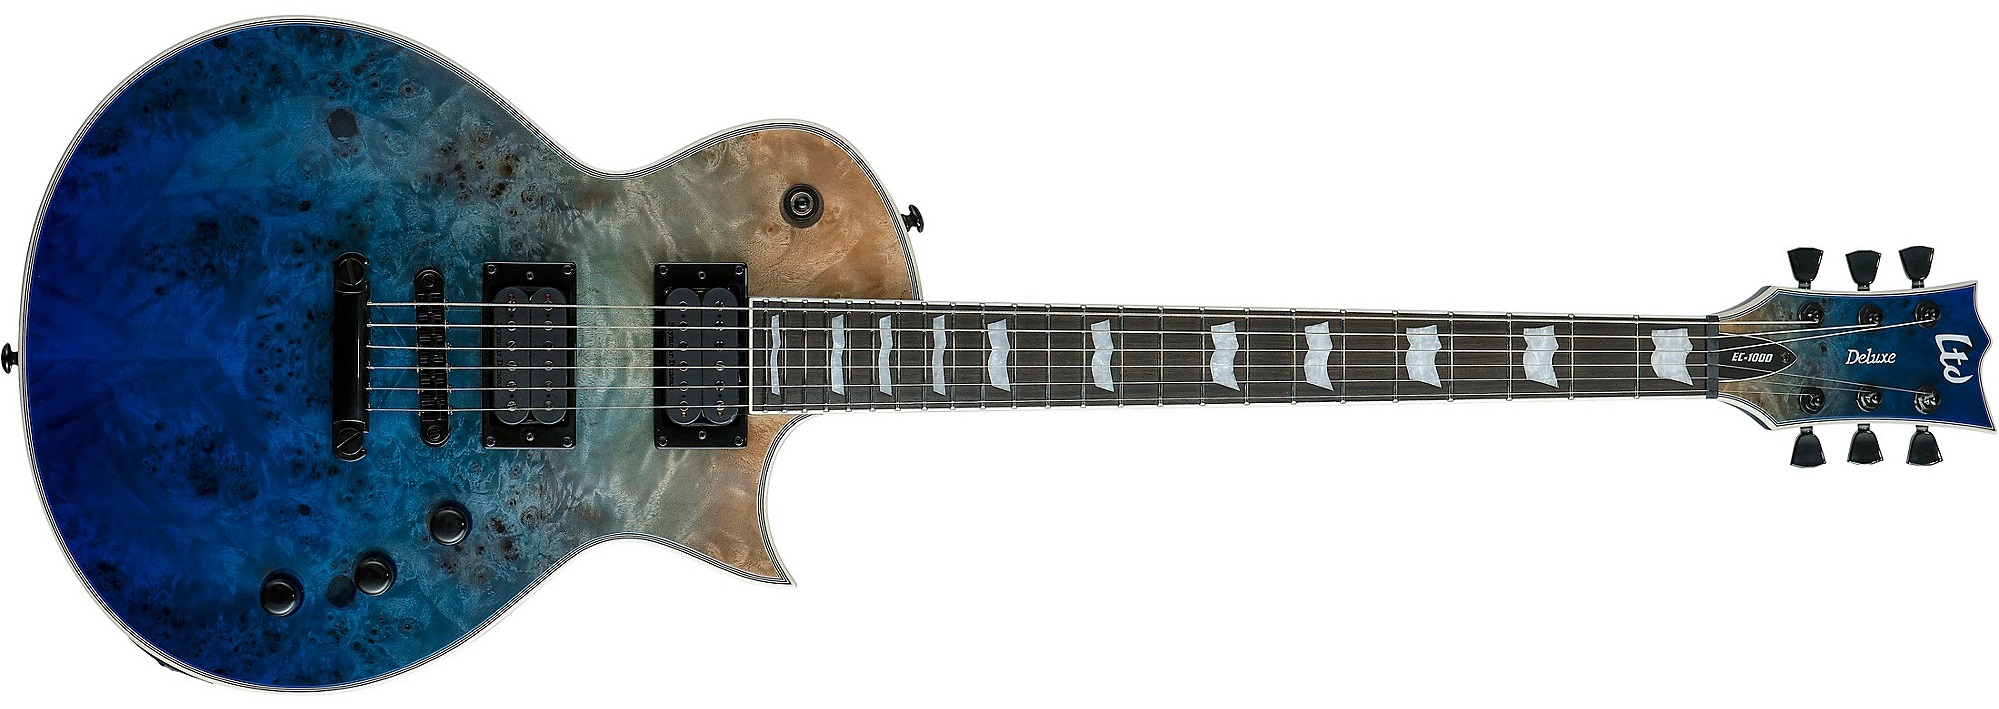 ESP LTD EC-1000 Electric Guitar on a white background